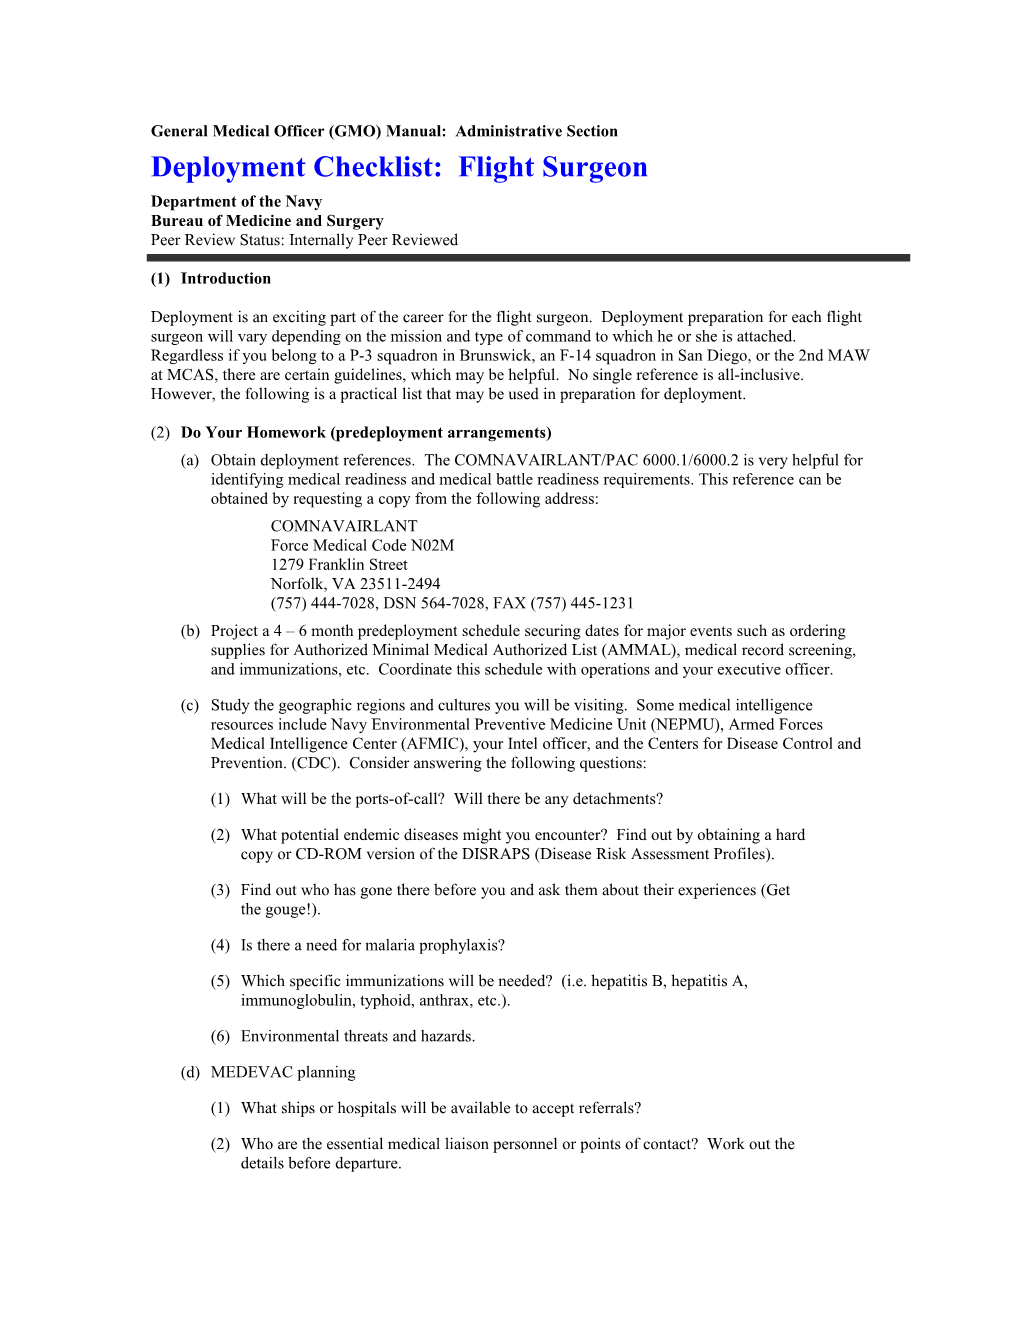 General Medical Officer (GMO) Manual: Deployment Checklist: Flight Surgeon